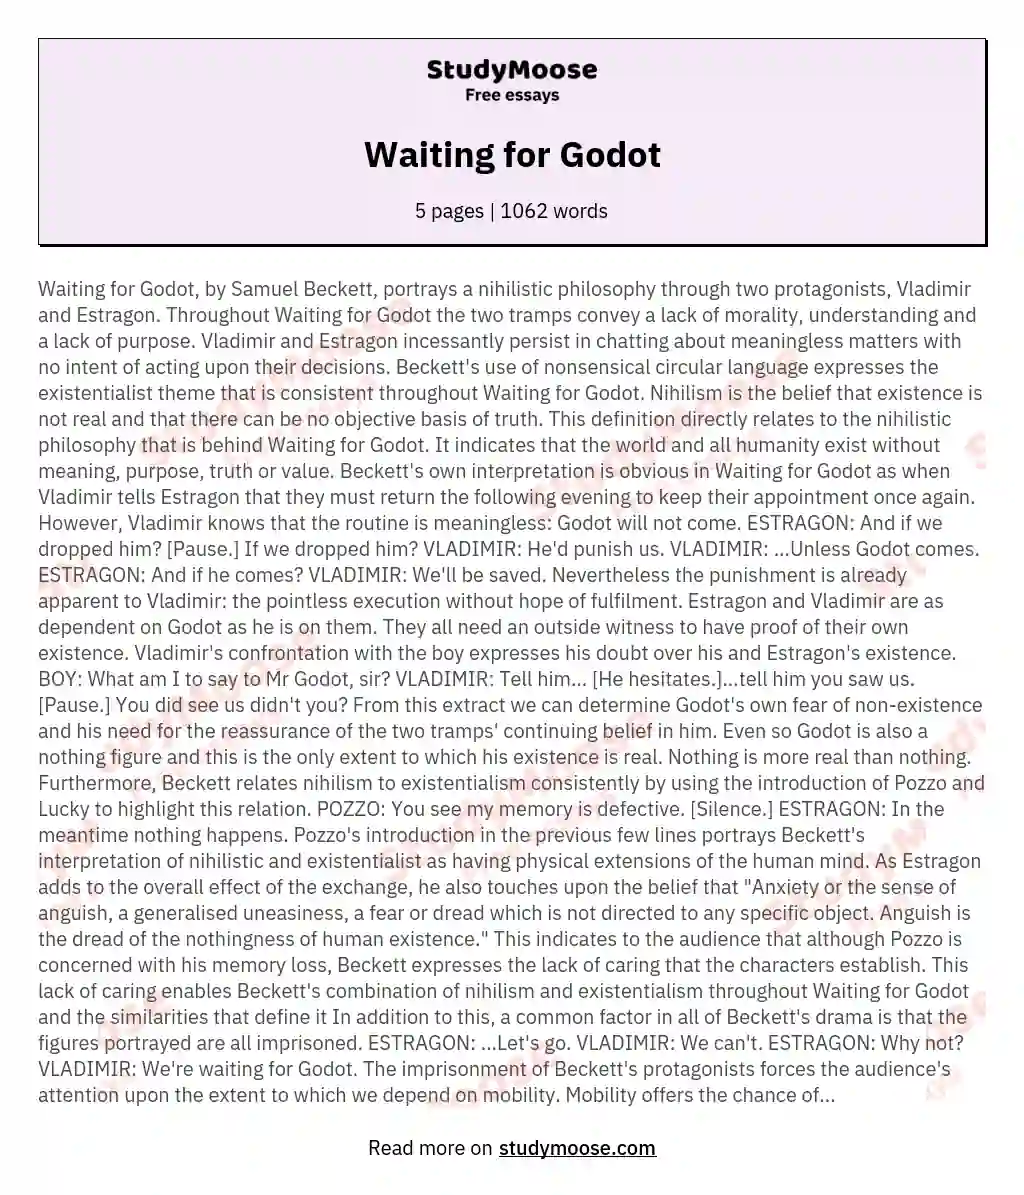 Waiting for Godot essay